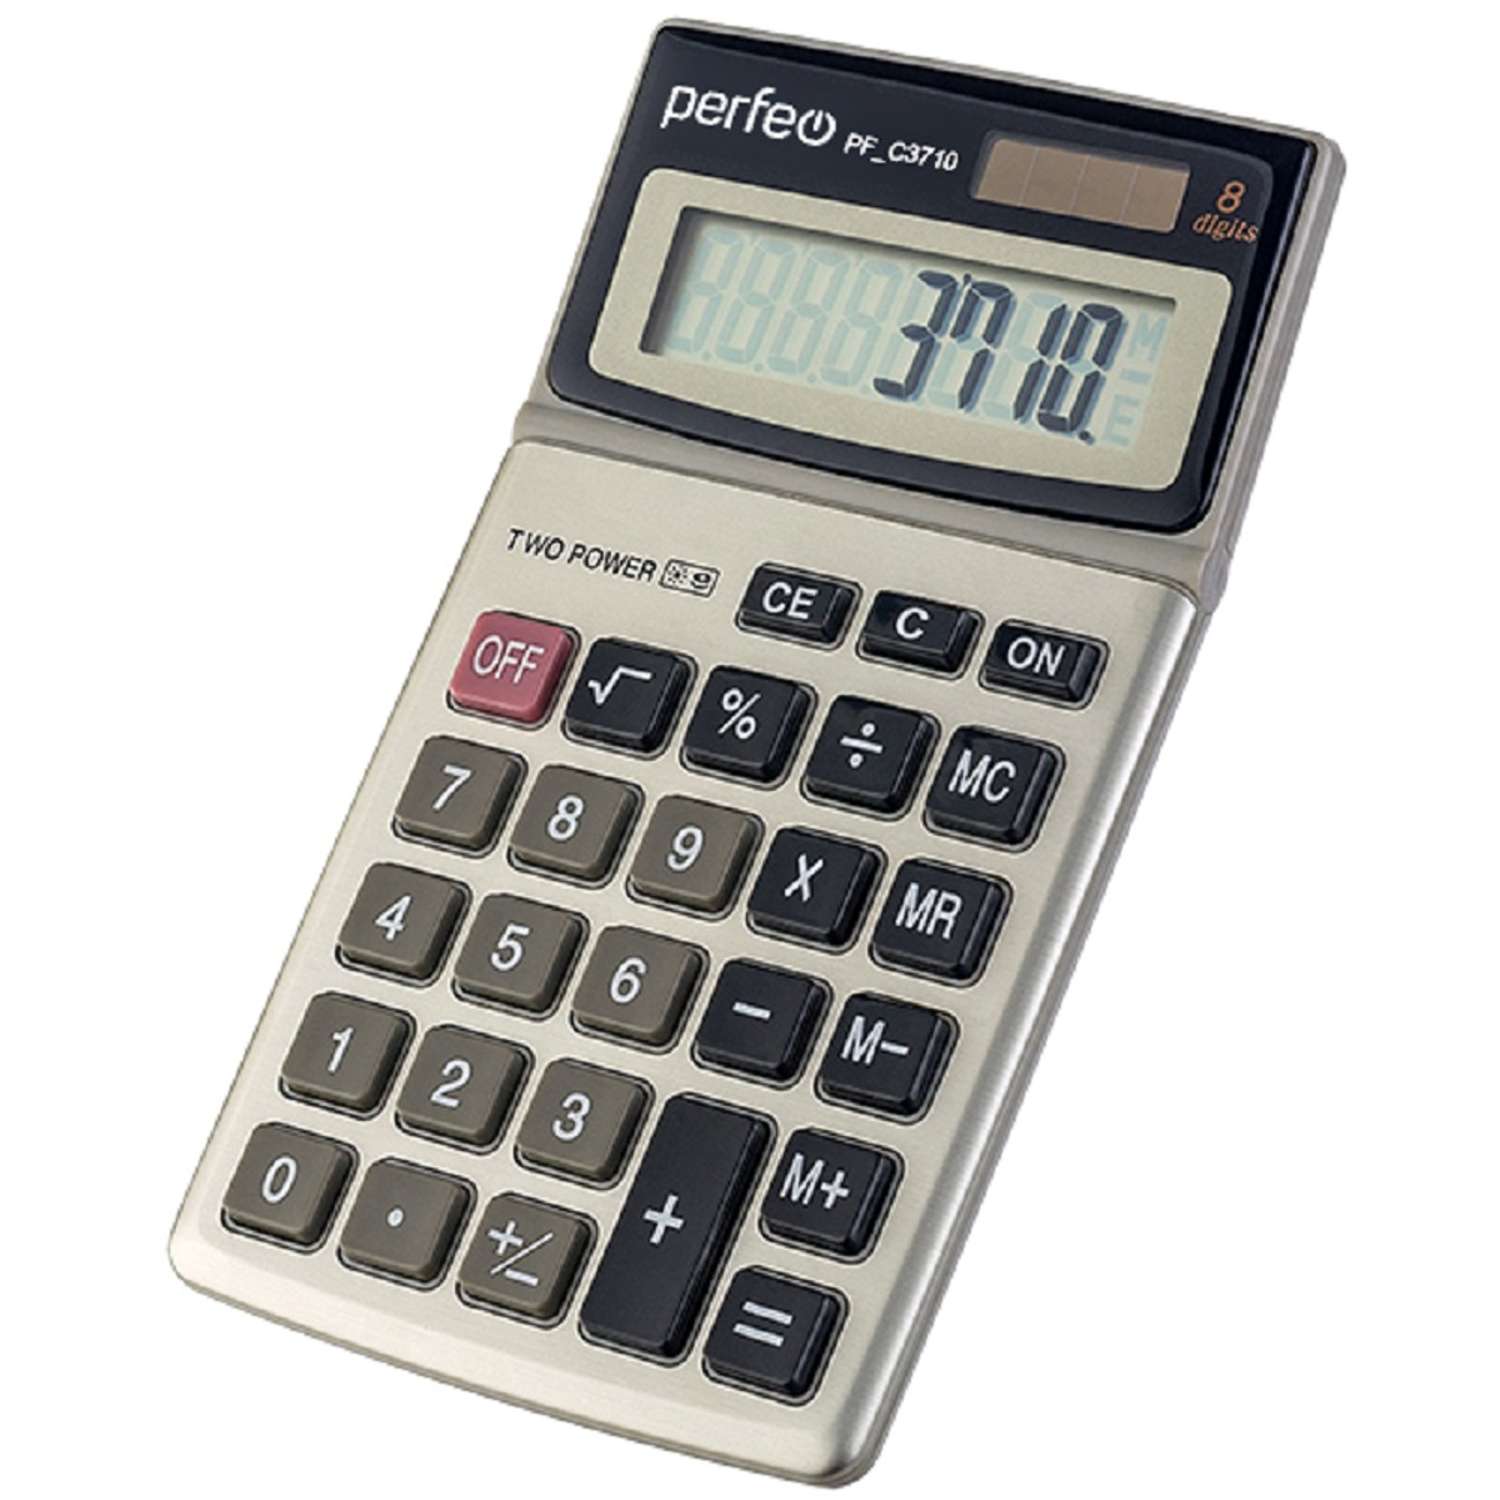 Калькулятор Perfeo PF C3710 карманный 8-разр. серый - фото 1